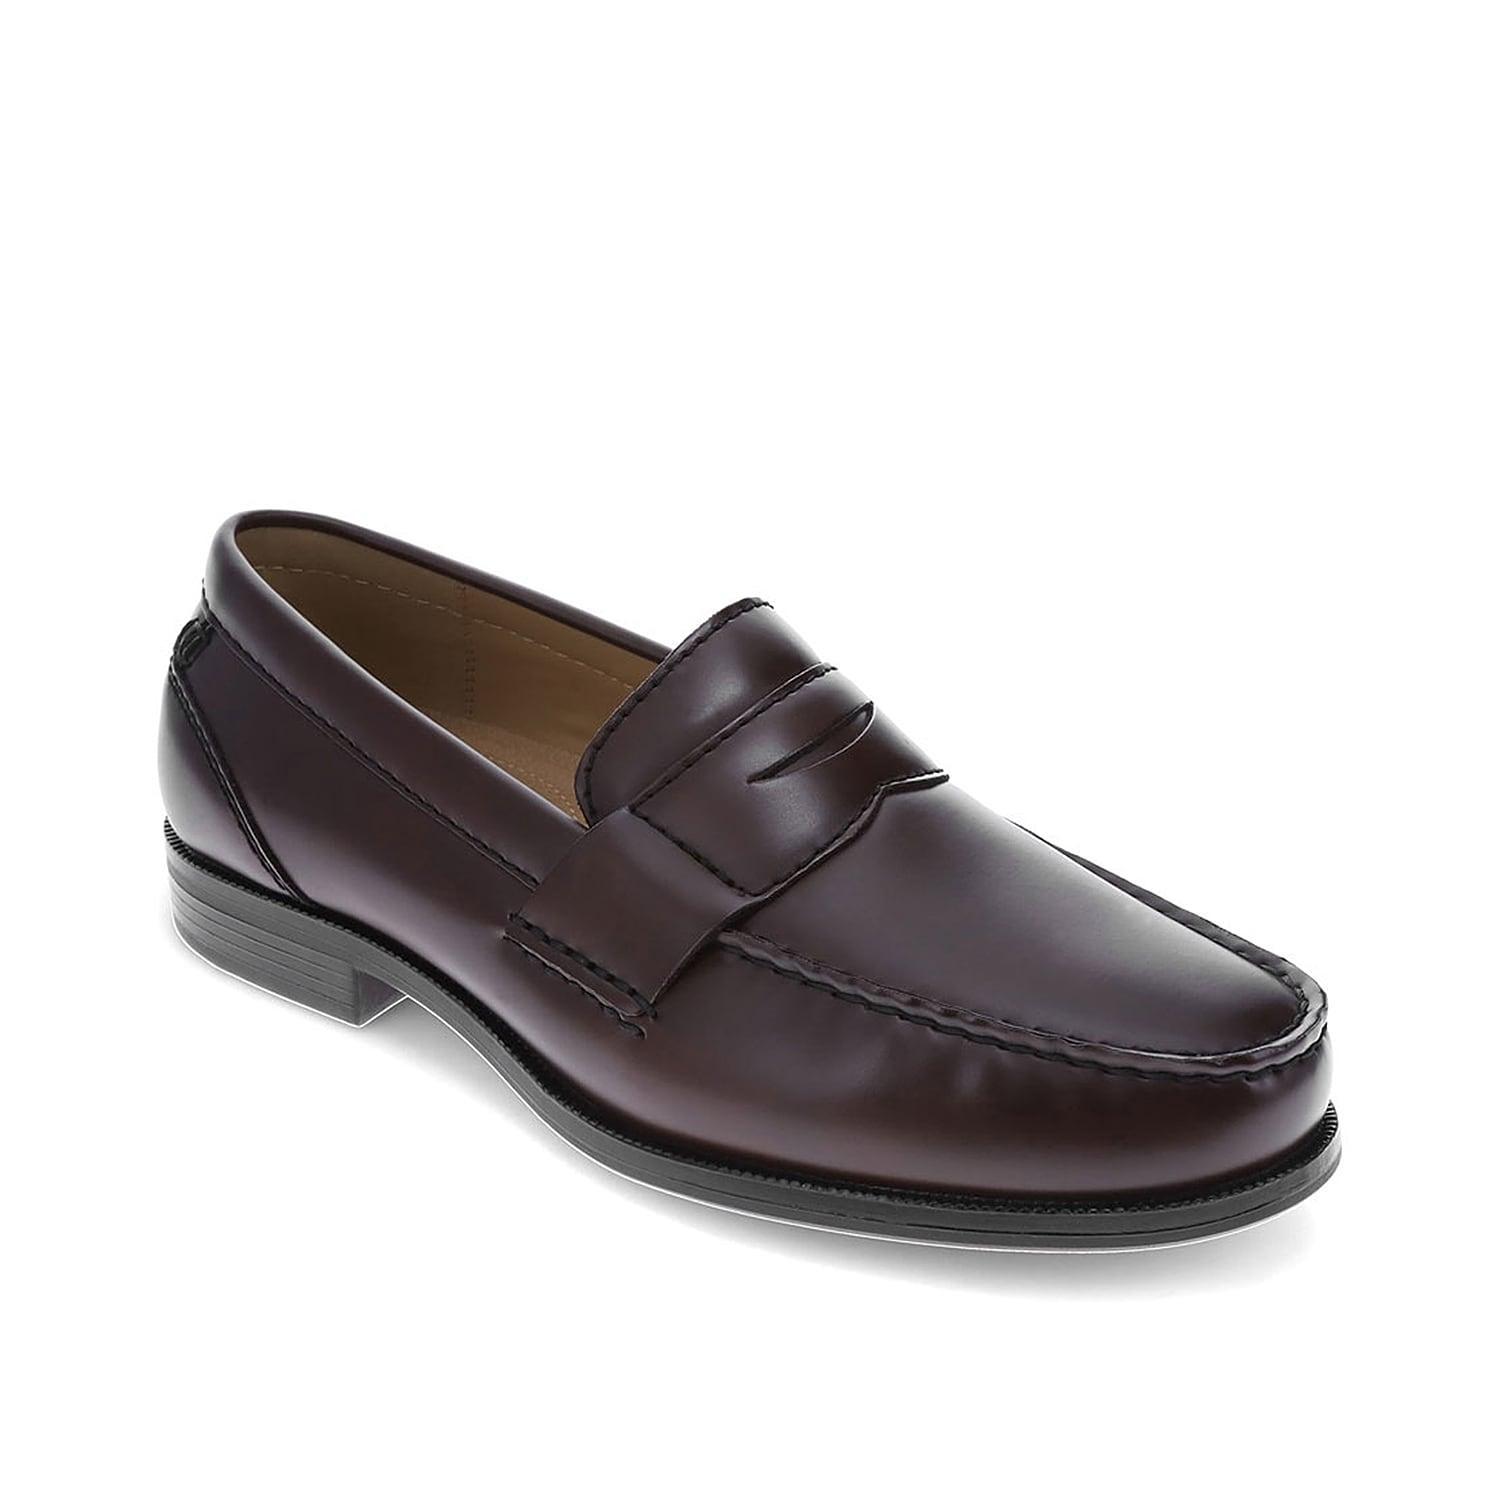 Dockers Colleague (Cordovan) Men's Shoes Product Image